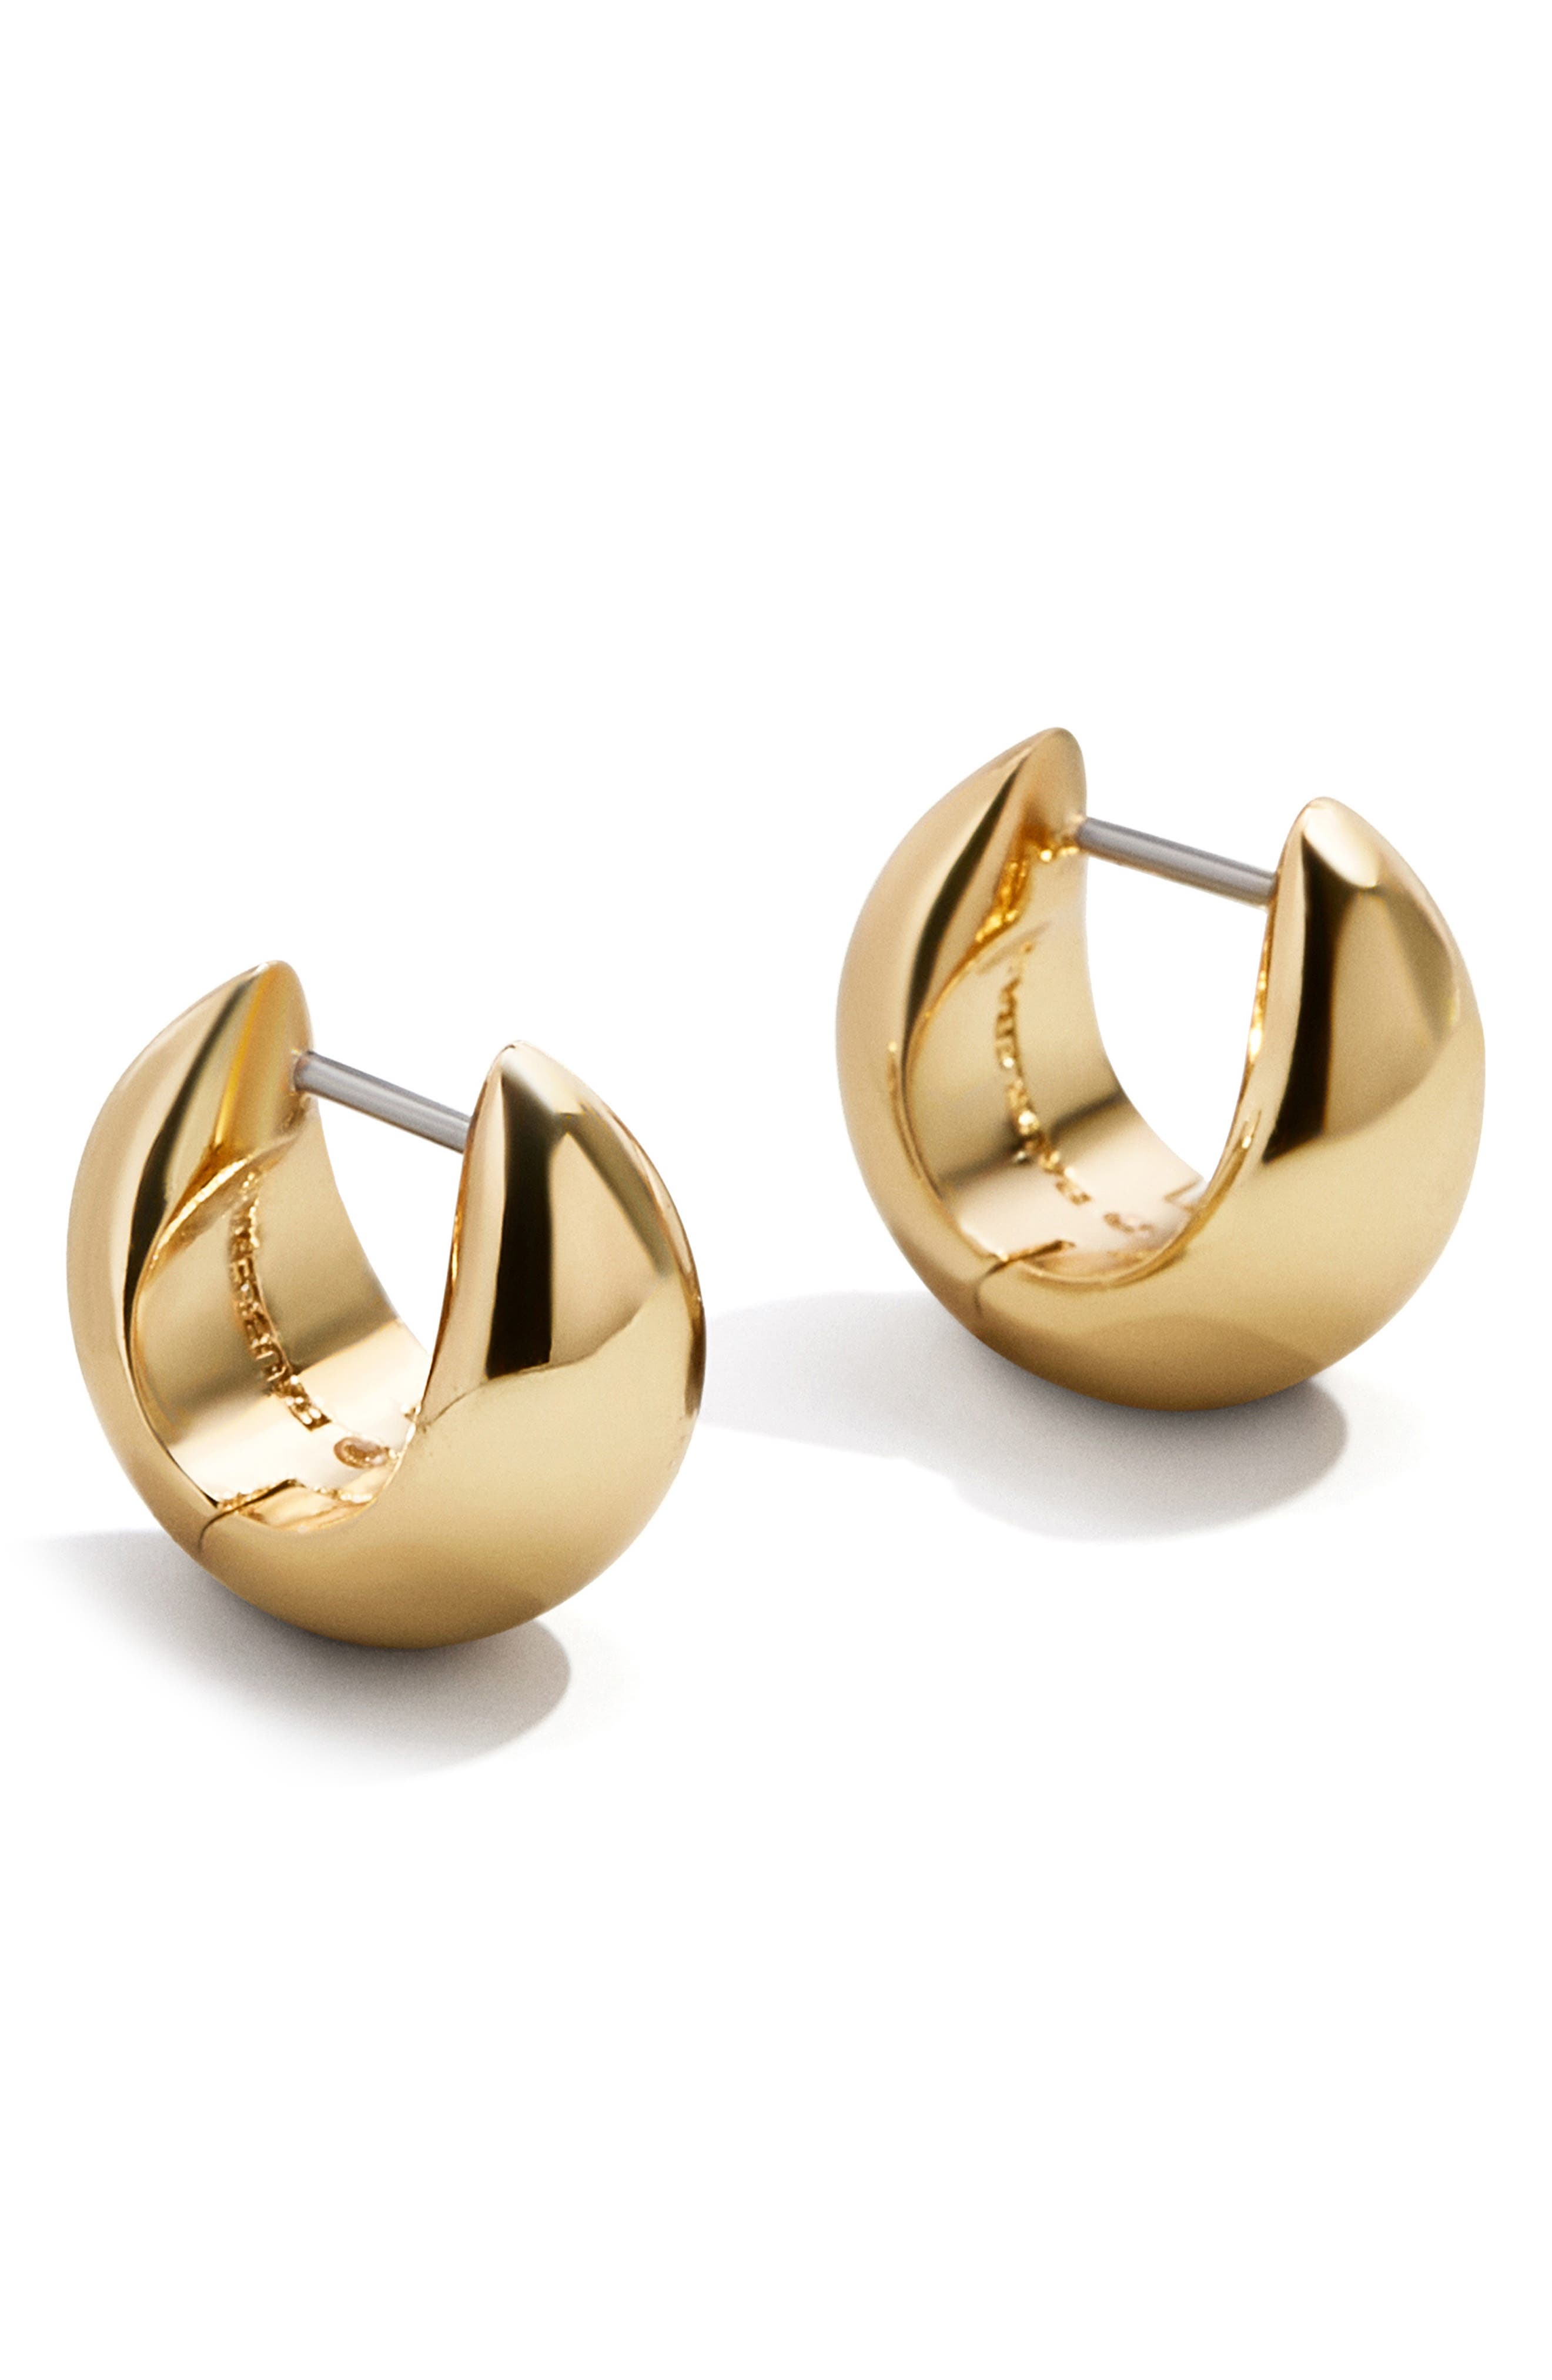 Baublebar Amia 18K Gold Plated CZ Heart Stud Earrings